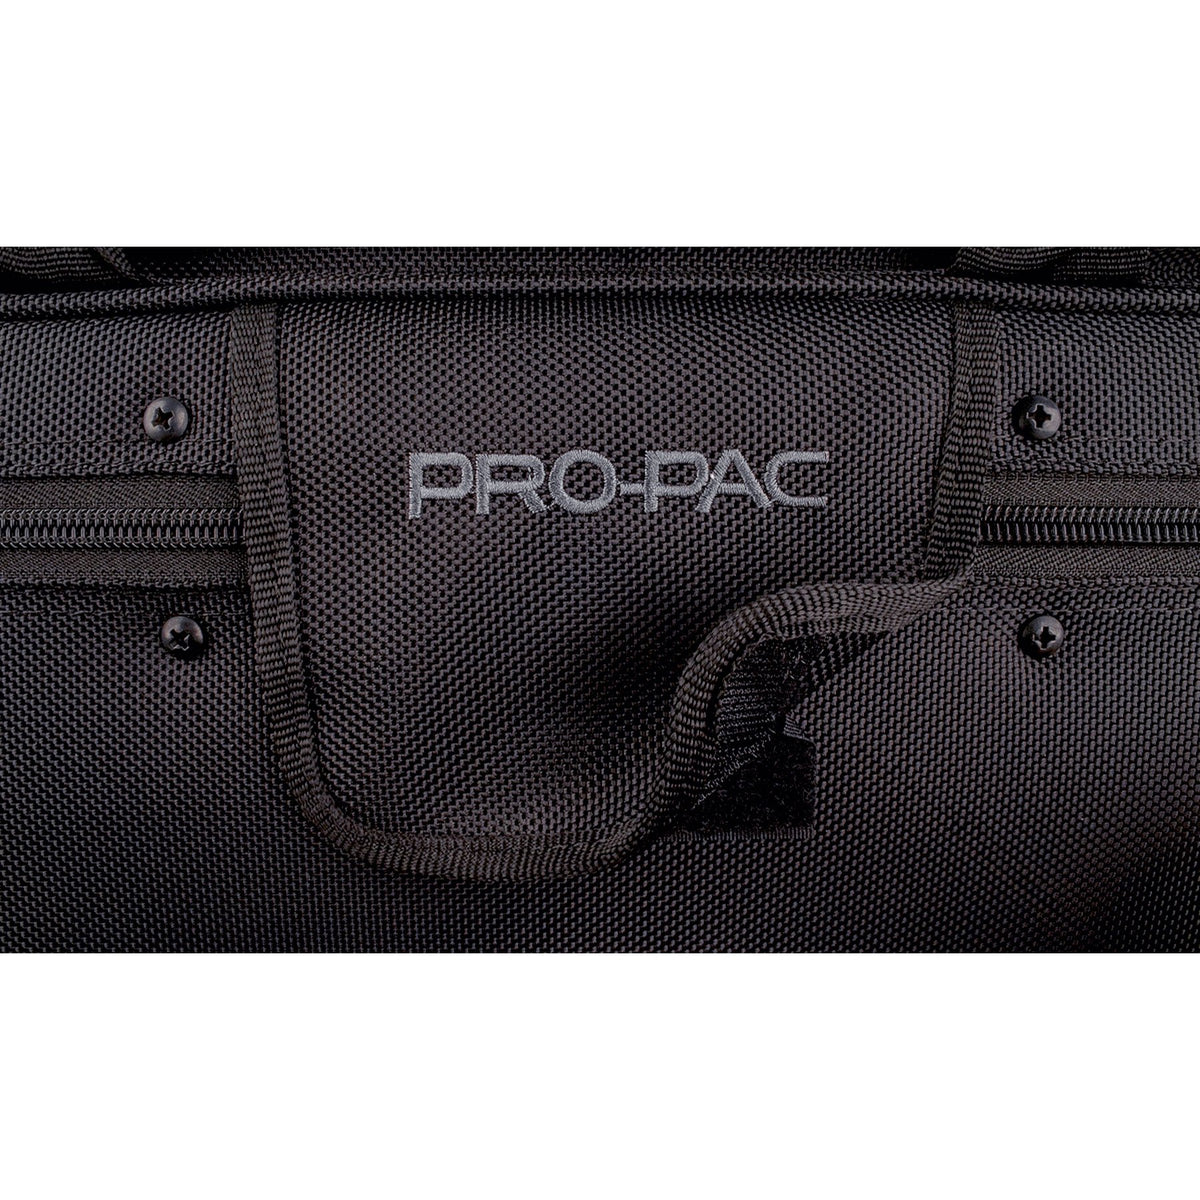 Protec - Tenor Trombone PRO PAC Case (Contoured)-Case-Protec-Music Elements